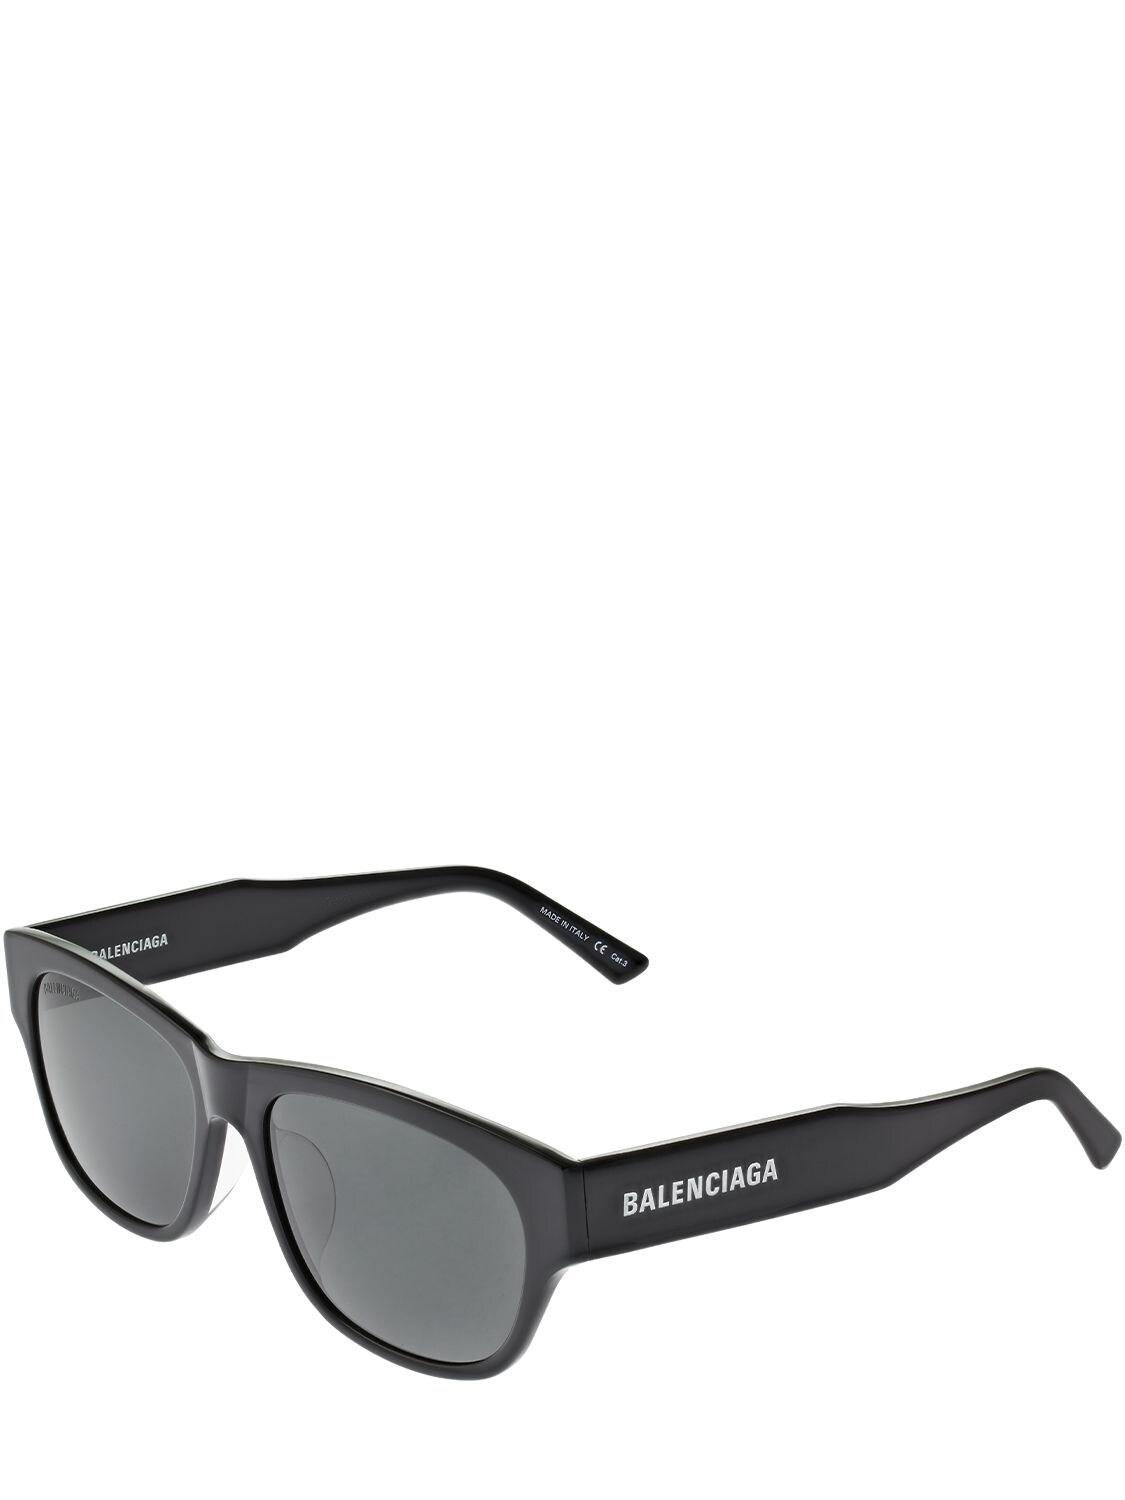 Balenciaga Flat Rectangle 2.0 Acetate Sunglasses in Black